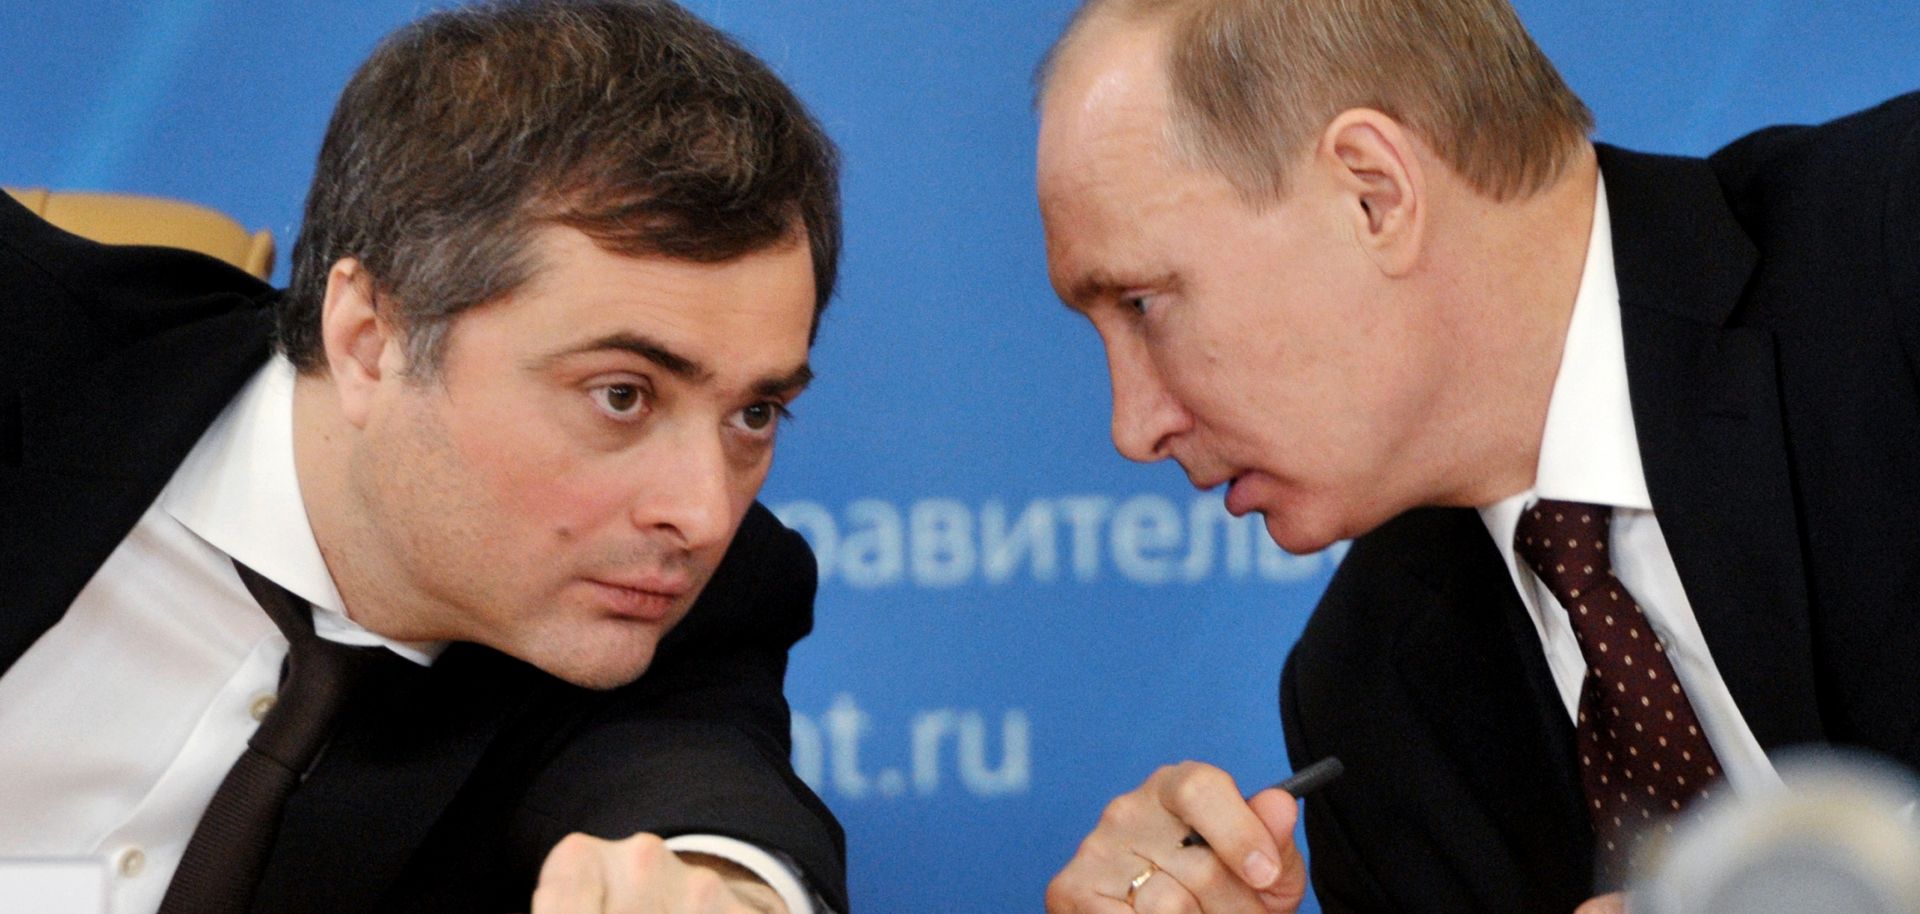 Russia's Prime Minister Vladimir Putin confers with his deputy Vladislav Surkov.